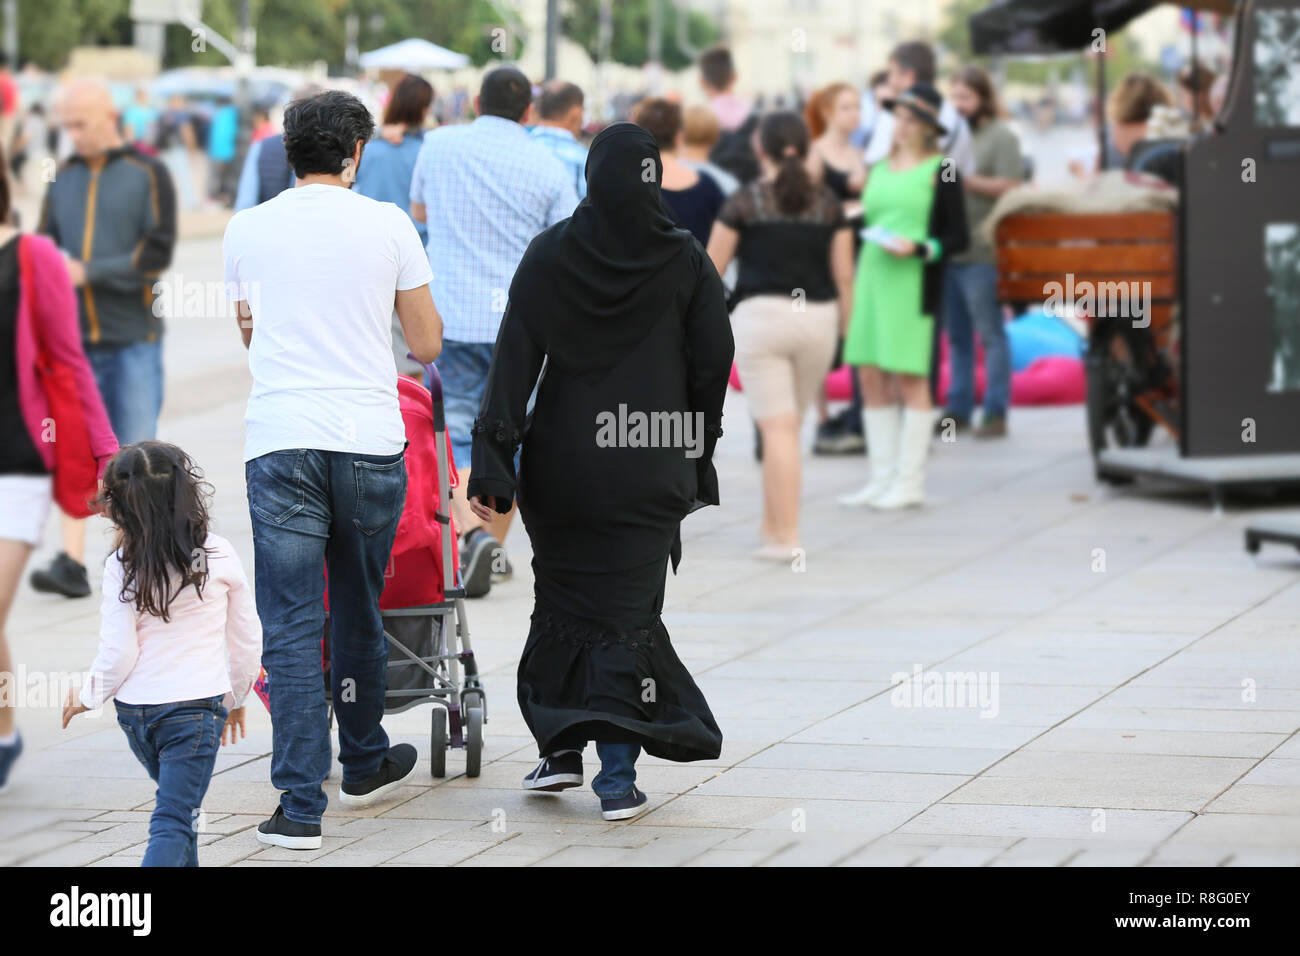 Islamic emigrants in a European city Stock Photo